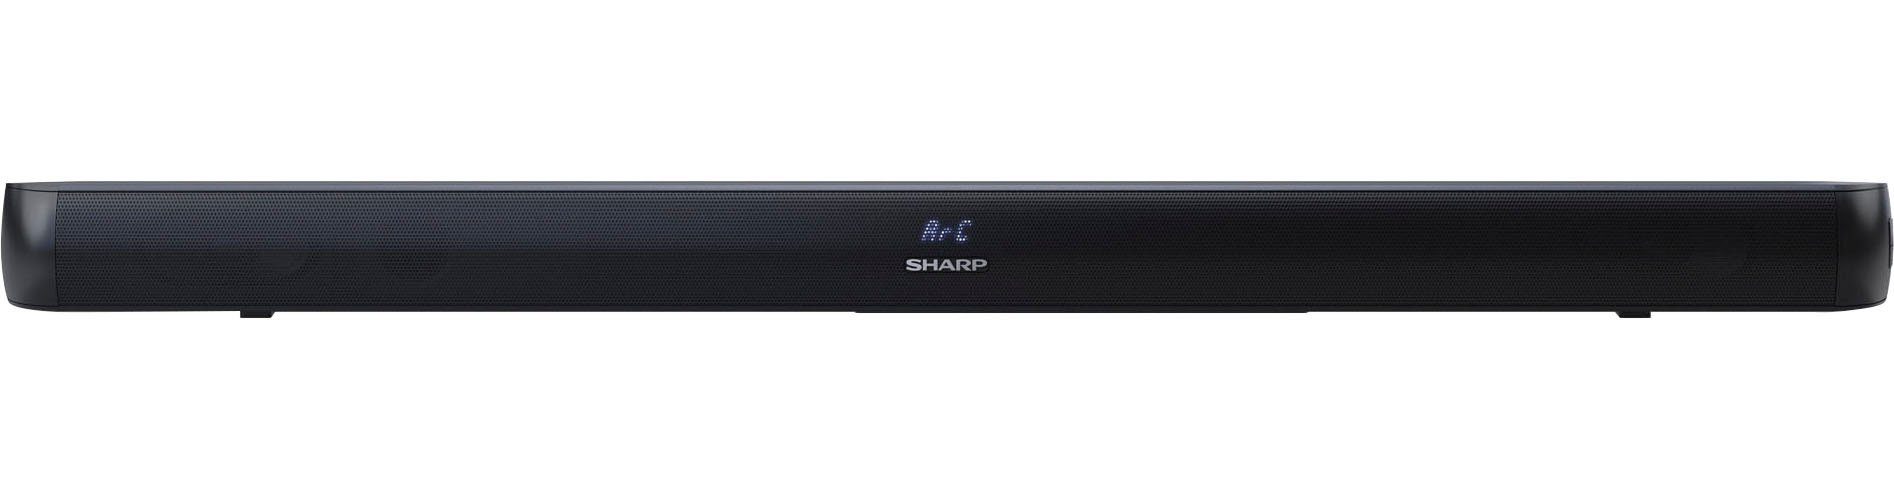 Sharp (Bluetooth) Stereo HT-SB147 Soundbar